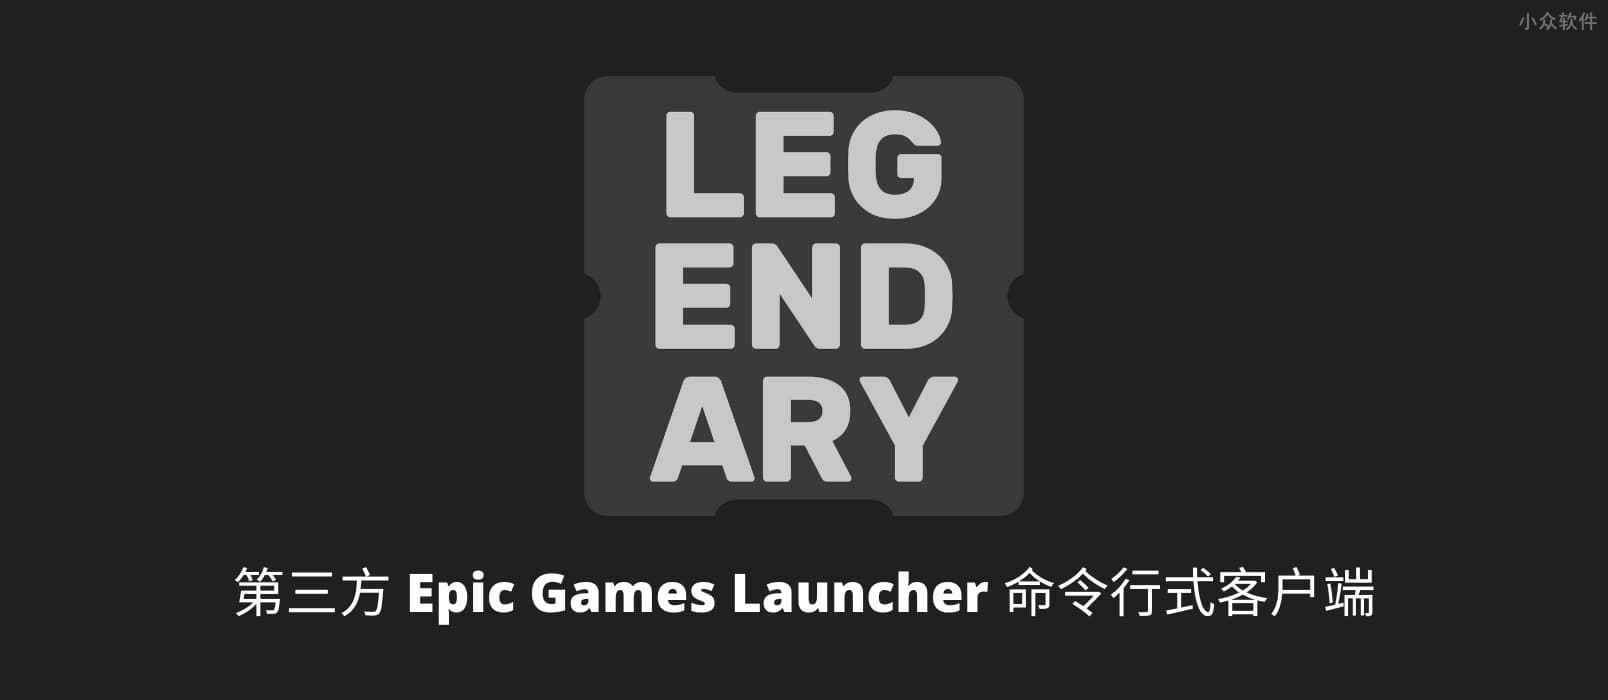 Legendary - 第三方 Epic Games Launcher 客户端，可下载、安装、更新游戏及 DLC，同步云存档